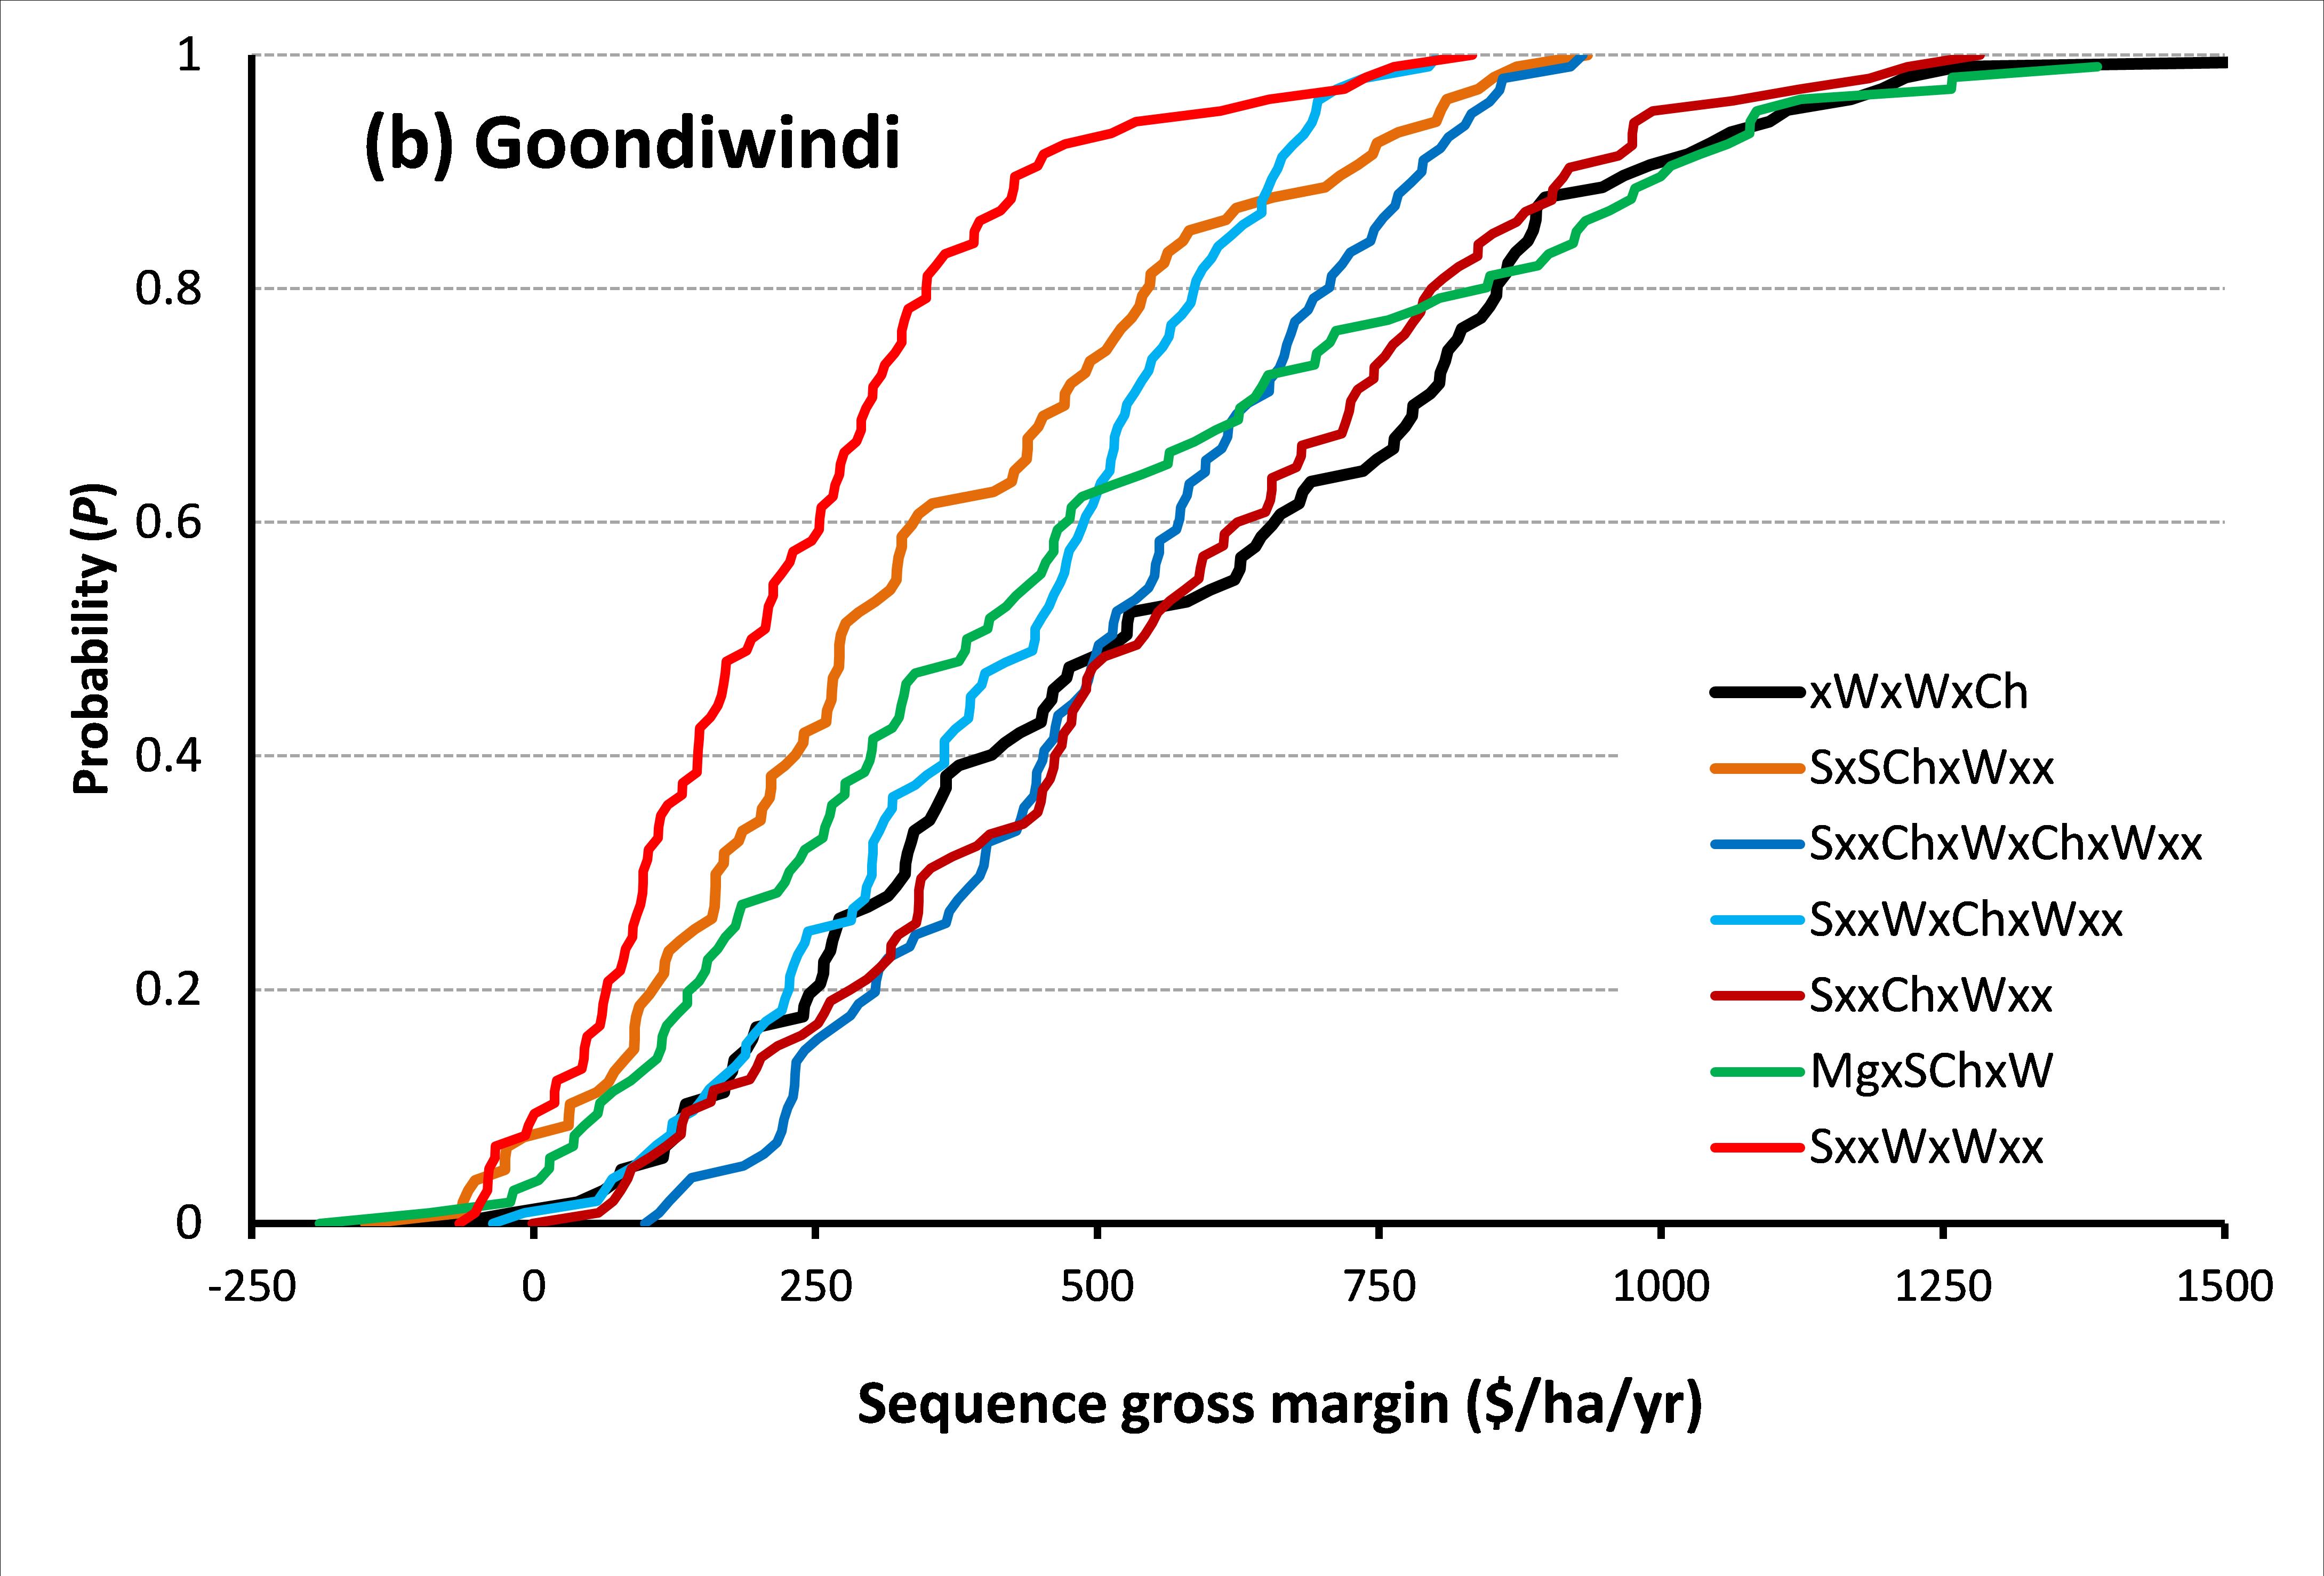 Figure 3: Cumulative probability of crop sequence gross margin at Goondiwindi (b) over the long-term.